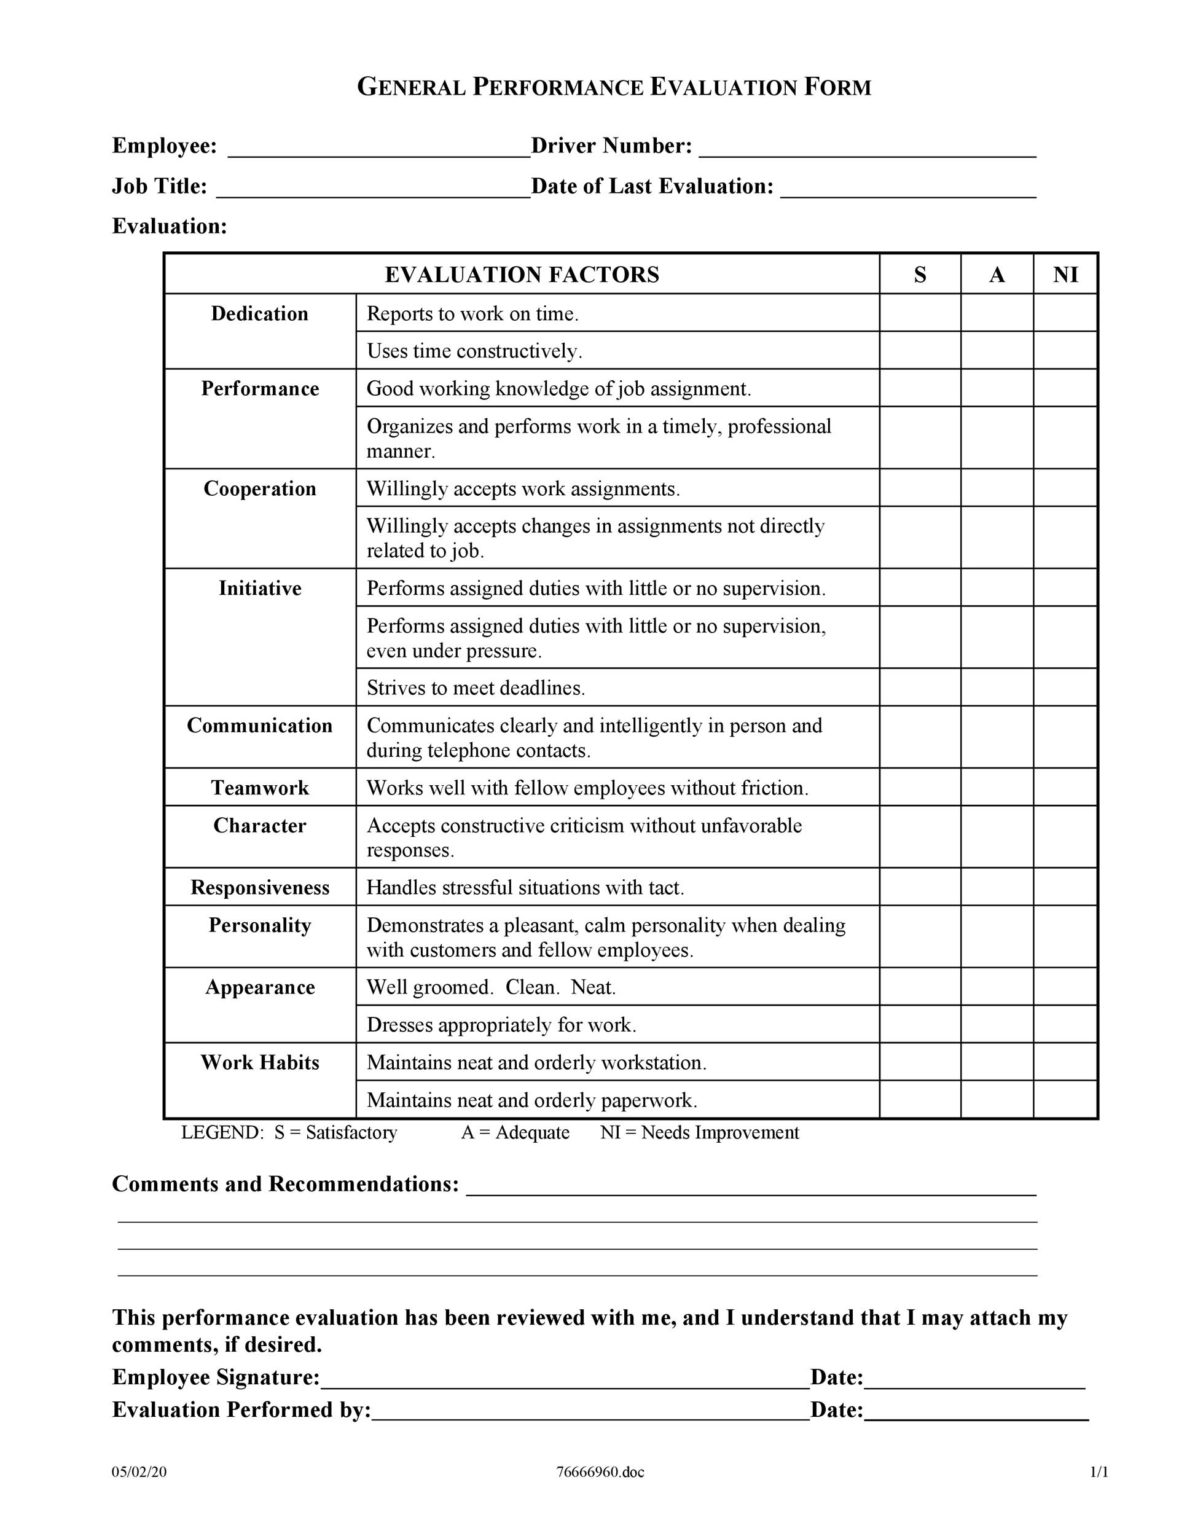 free-online-education-activity-evaluation-form-template-123formbuilder